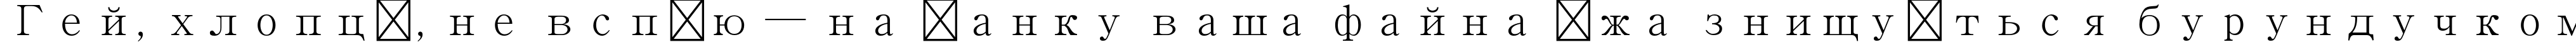 Пример написания шрифтом Adobe Myungjo Std M текста на украинском